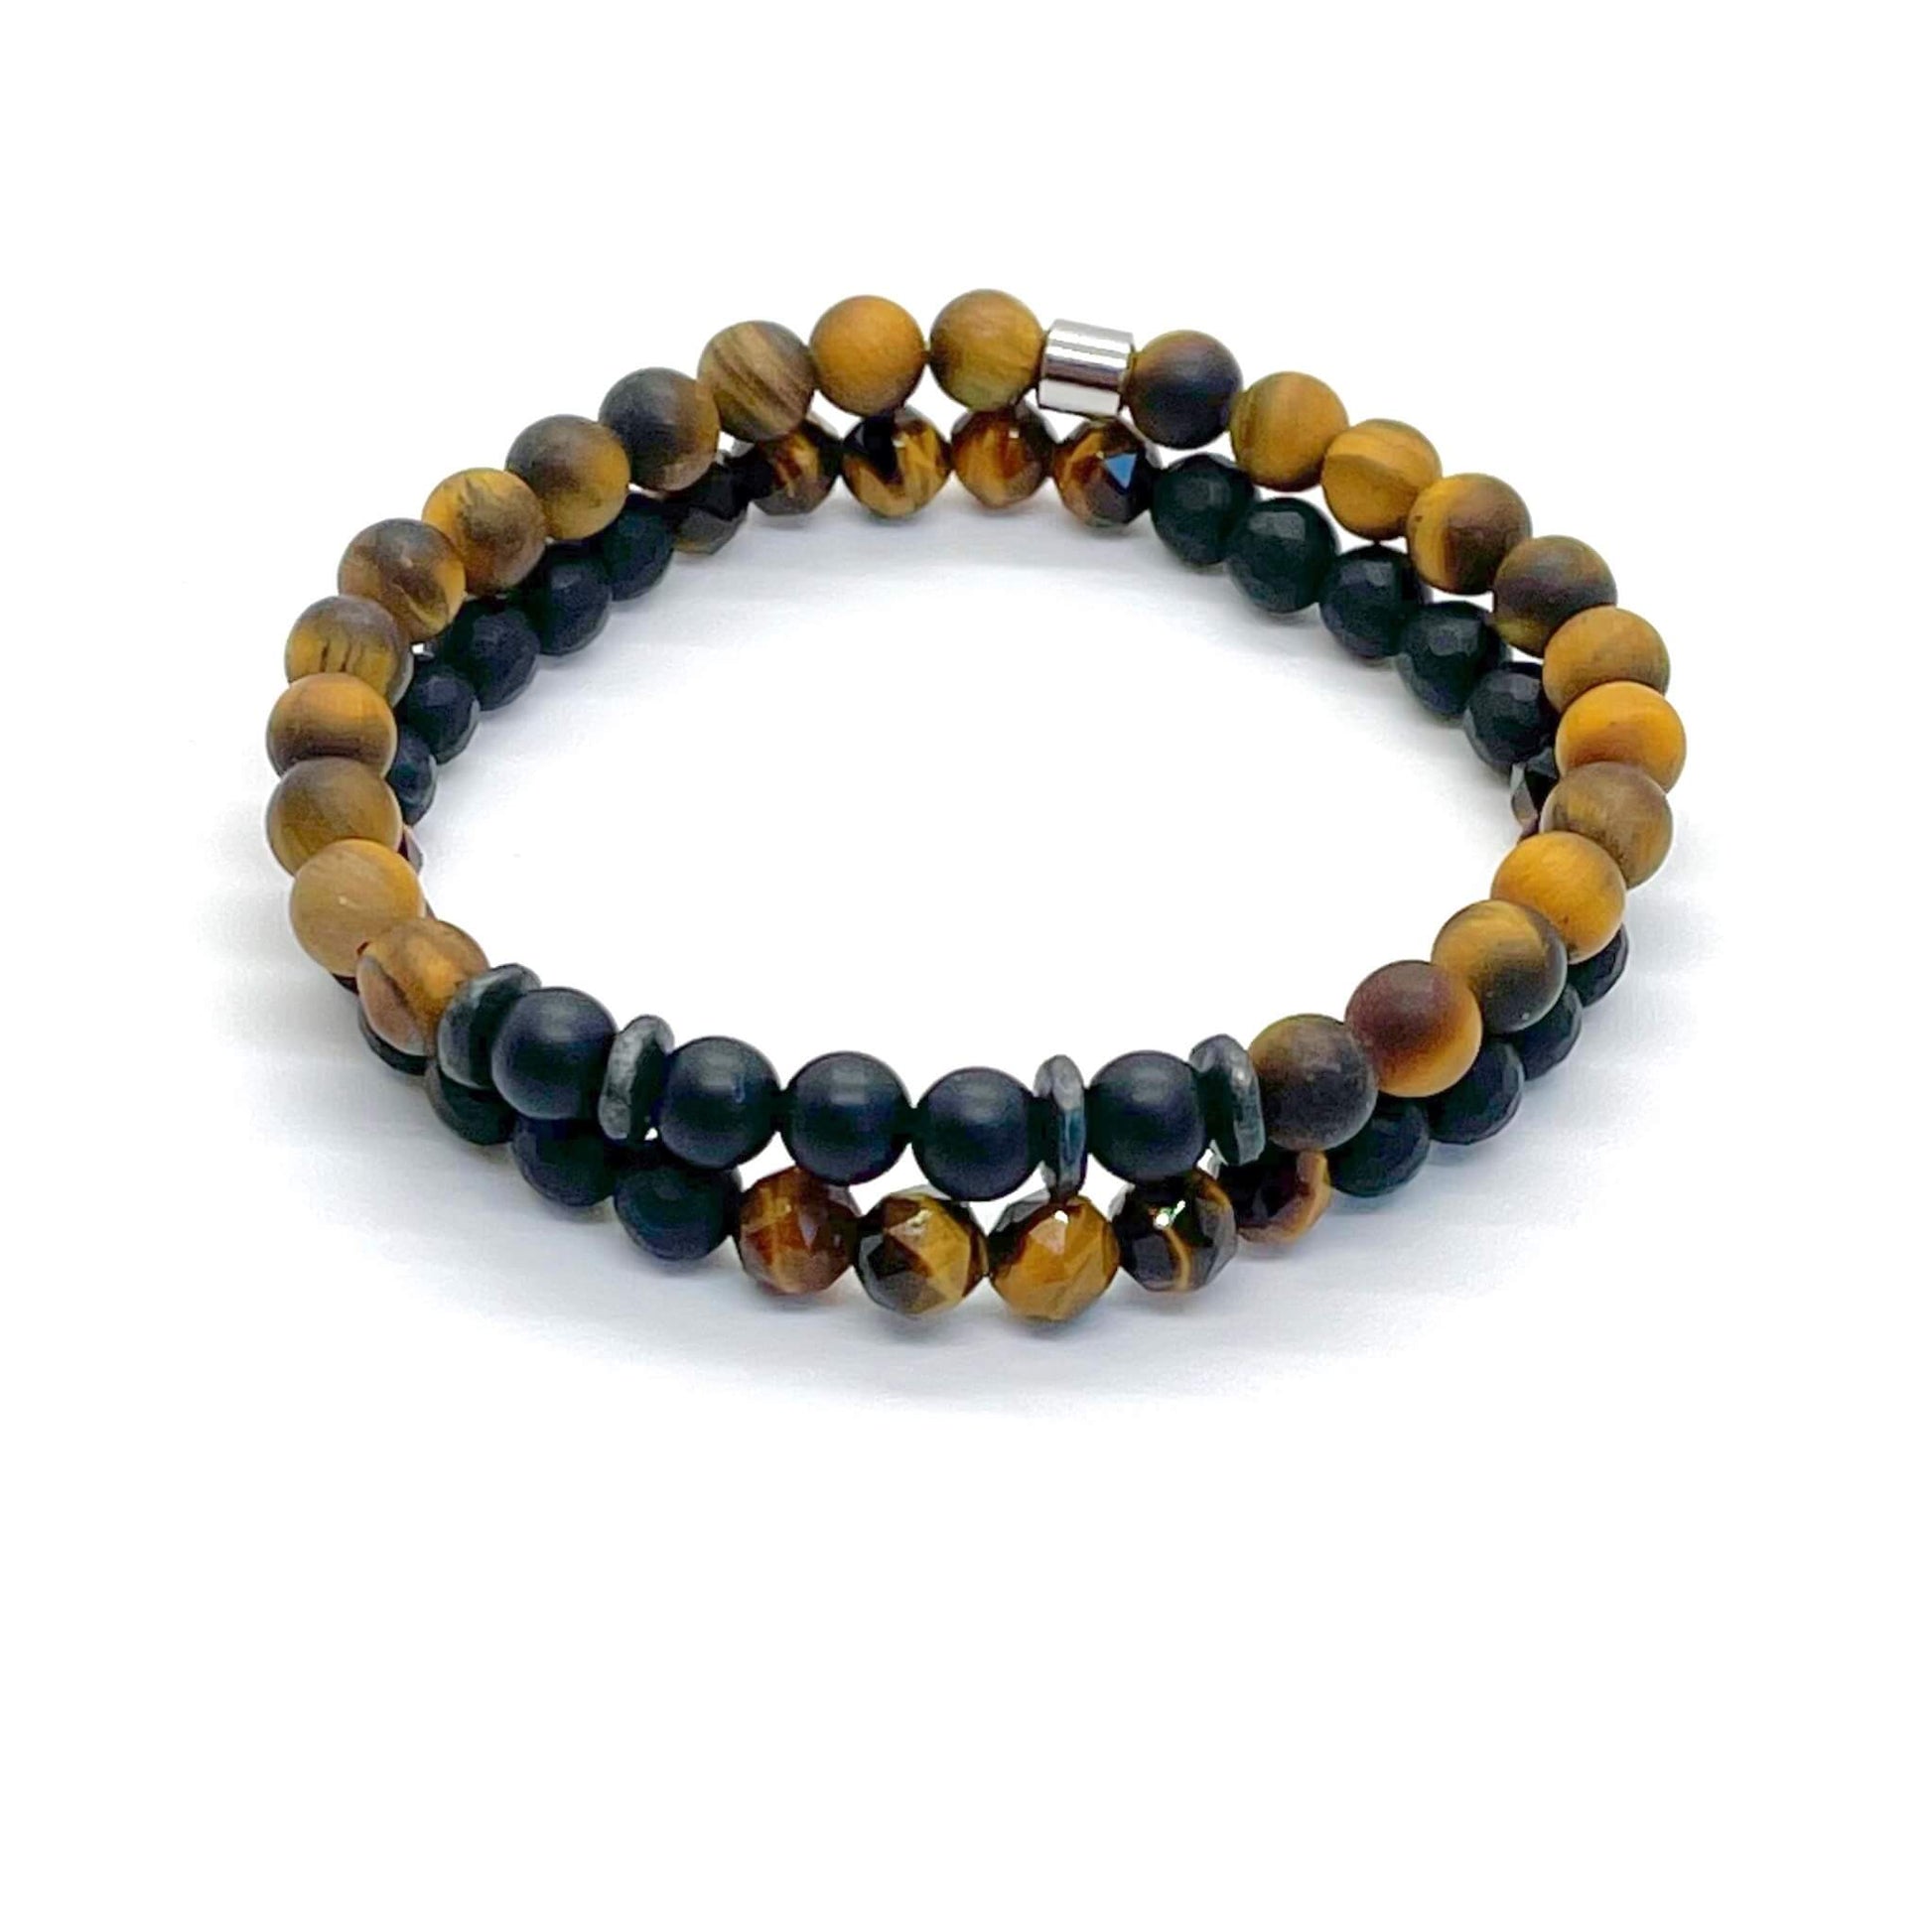 Men's tigers eye and black onyx beaded gemstone stretch bracelet set of 2.